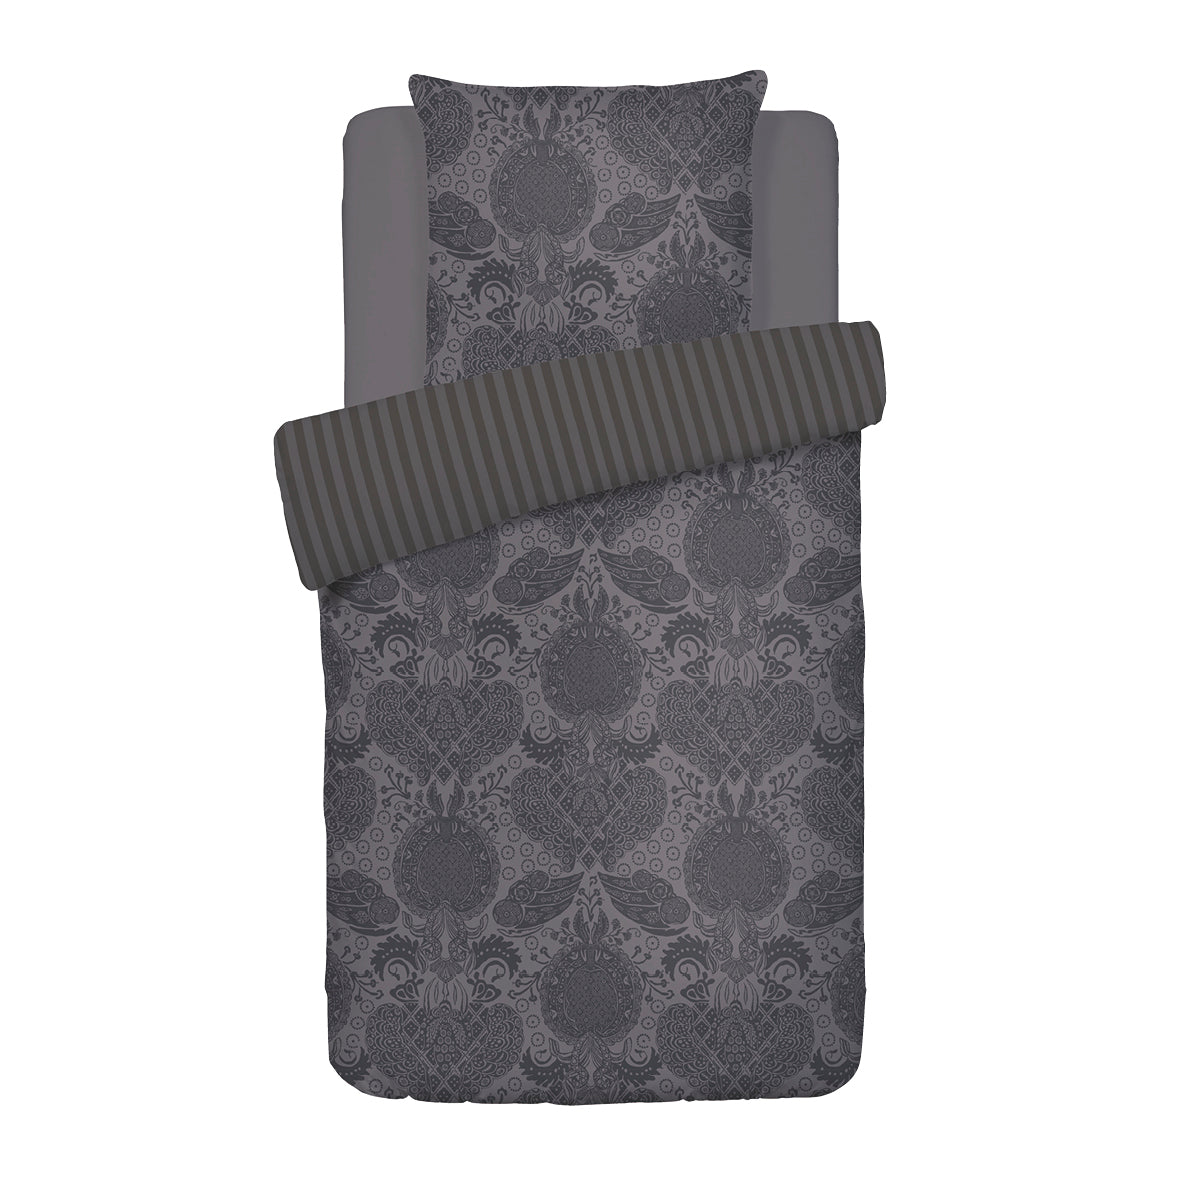 Duvet cover + pillowcase(s) cotton satin - Arles Dark grey